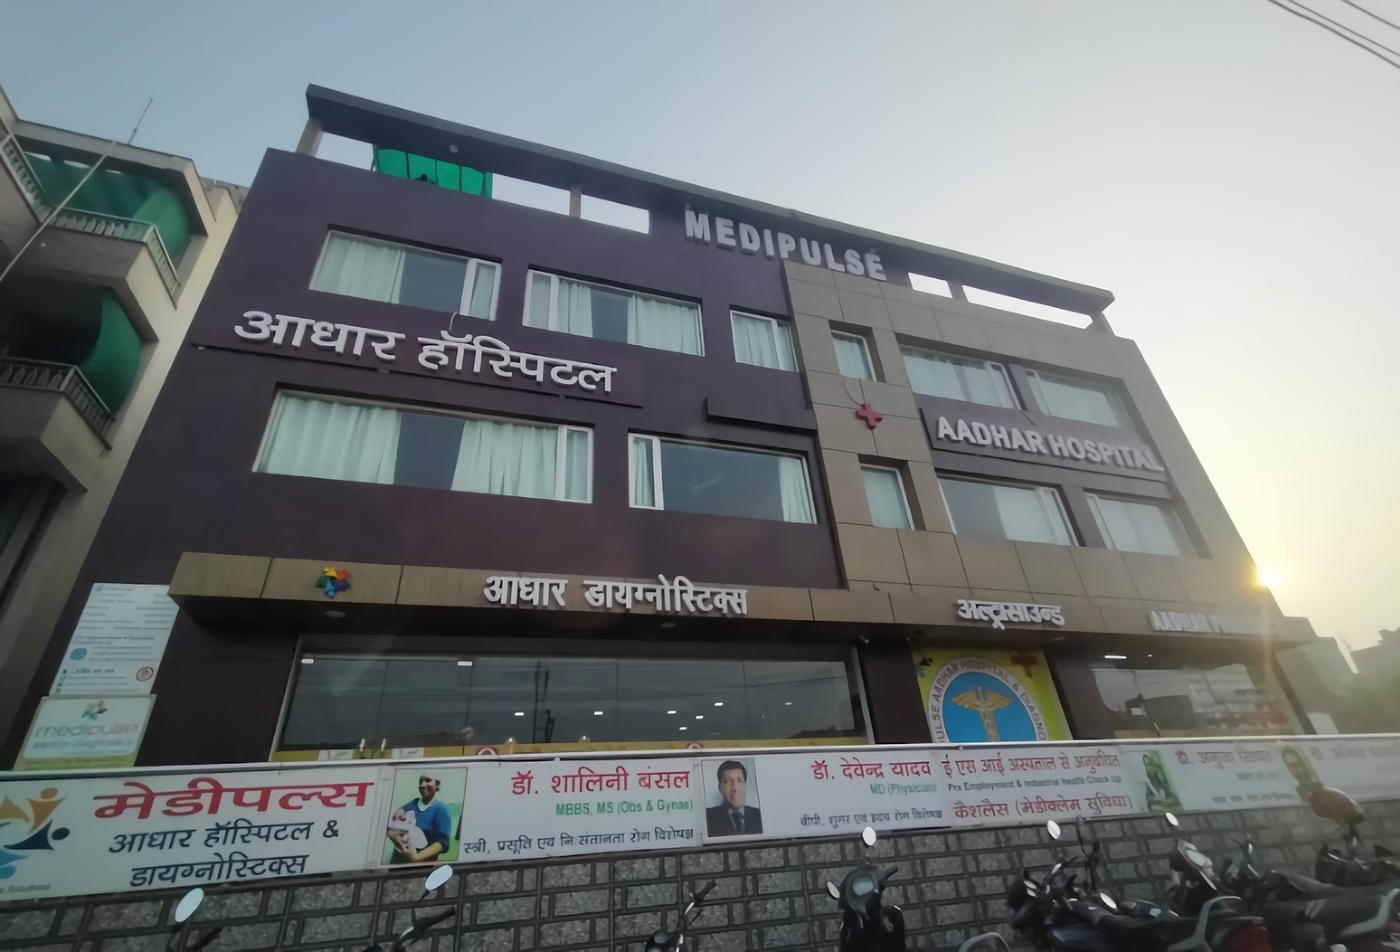 Medipulse Aadhar Hospital